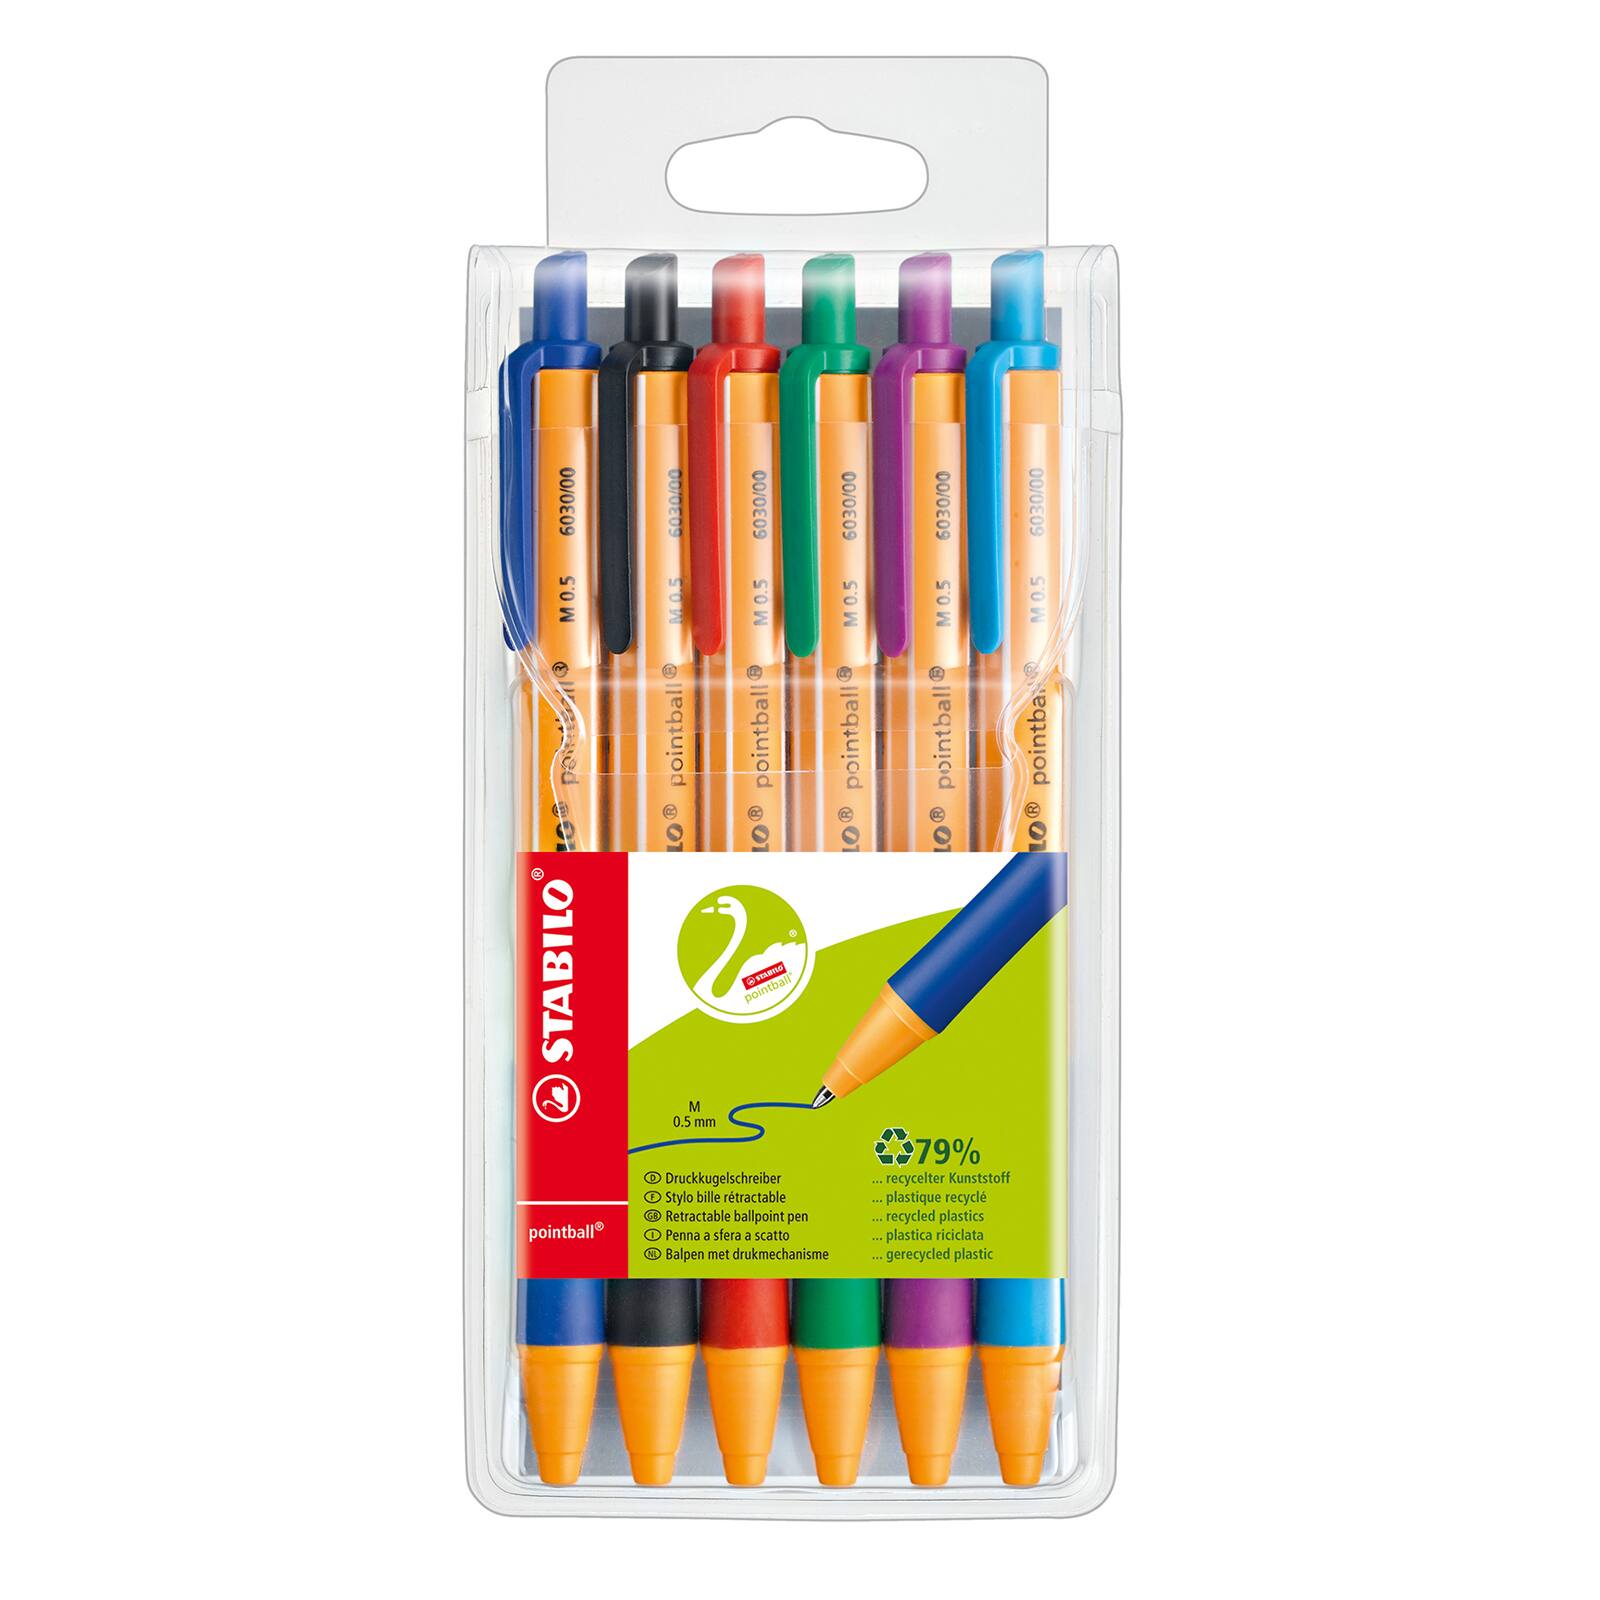 Multicolored Stabilo Pointball Pen Wallet Set of 6 